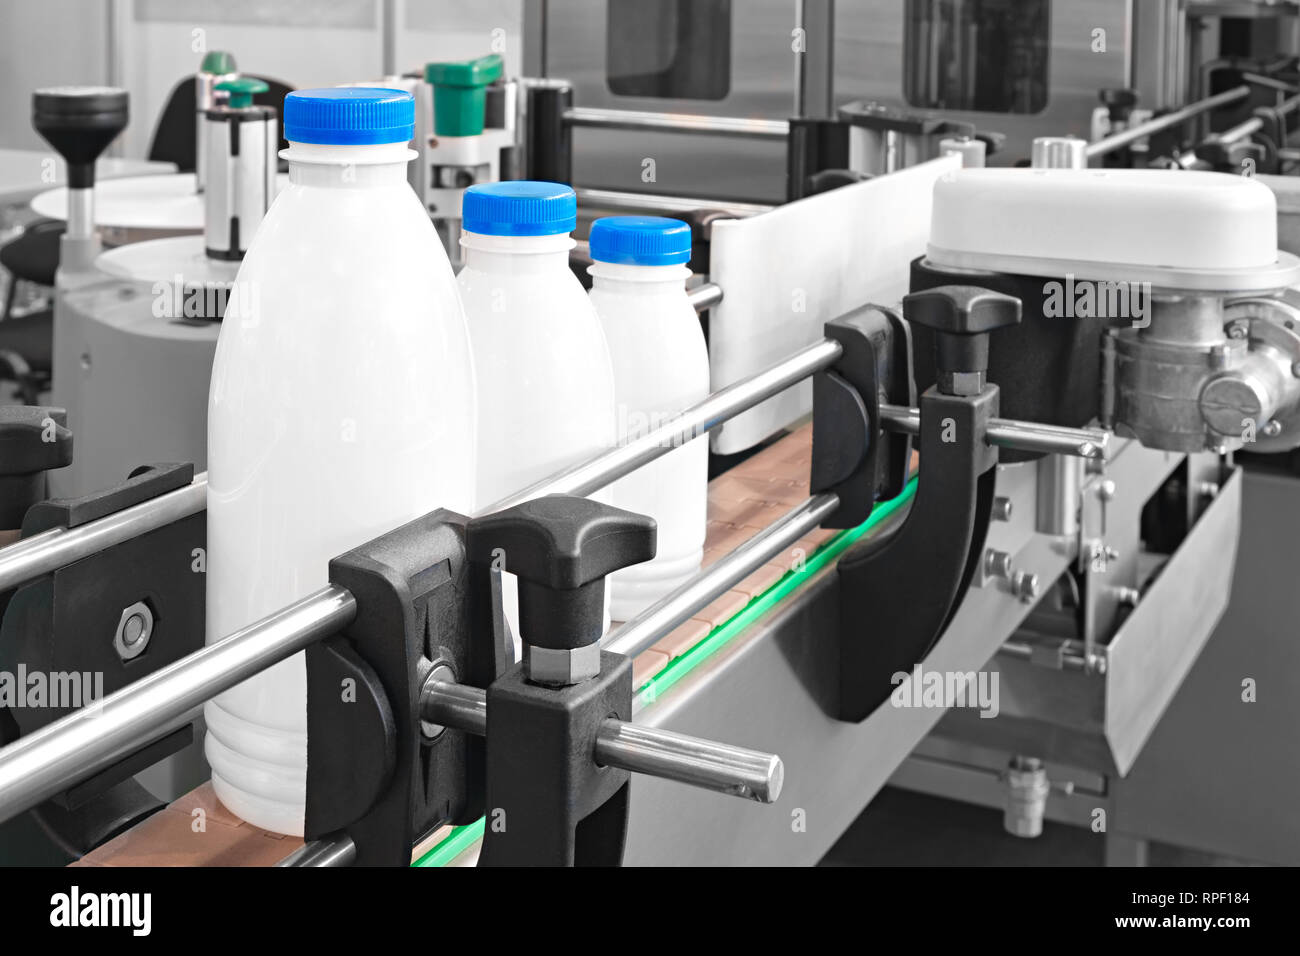 Plastic bottles on conveyor belt ready for pouring milk Stock Photo